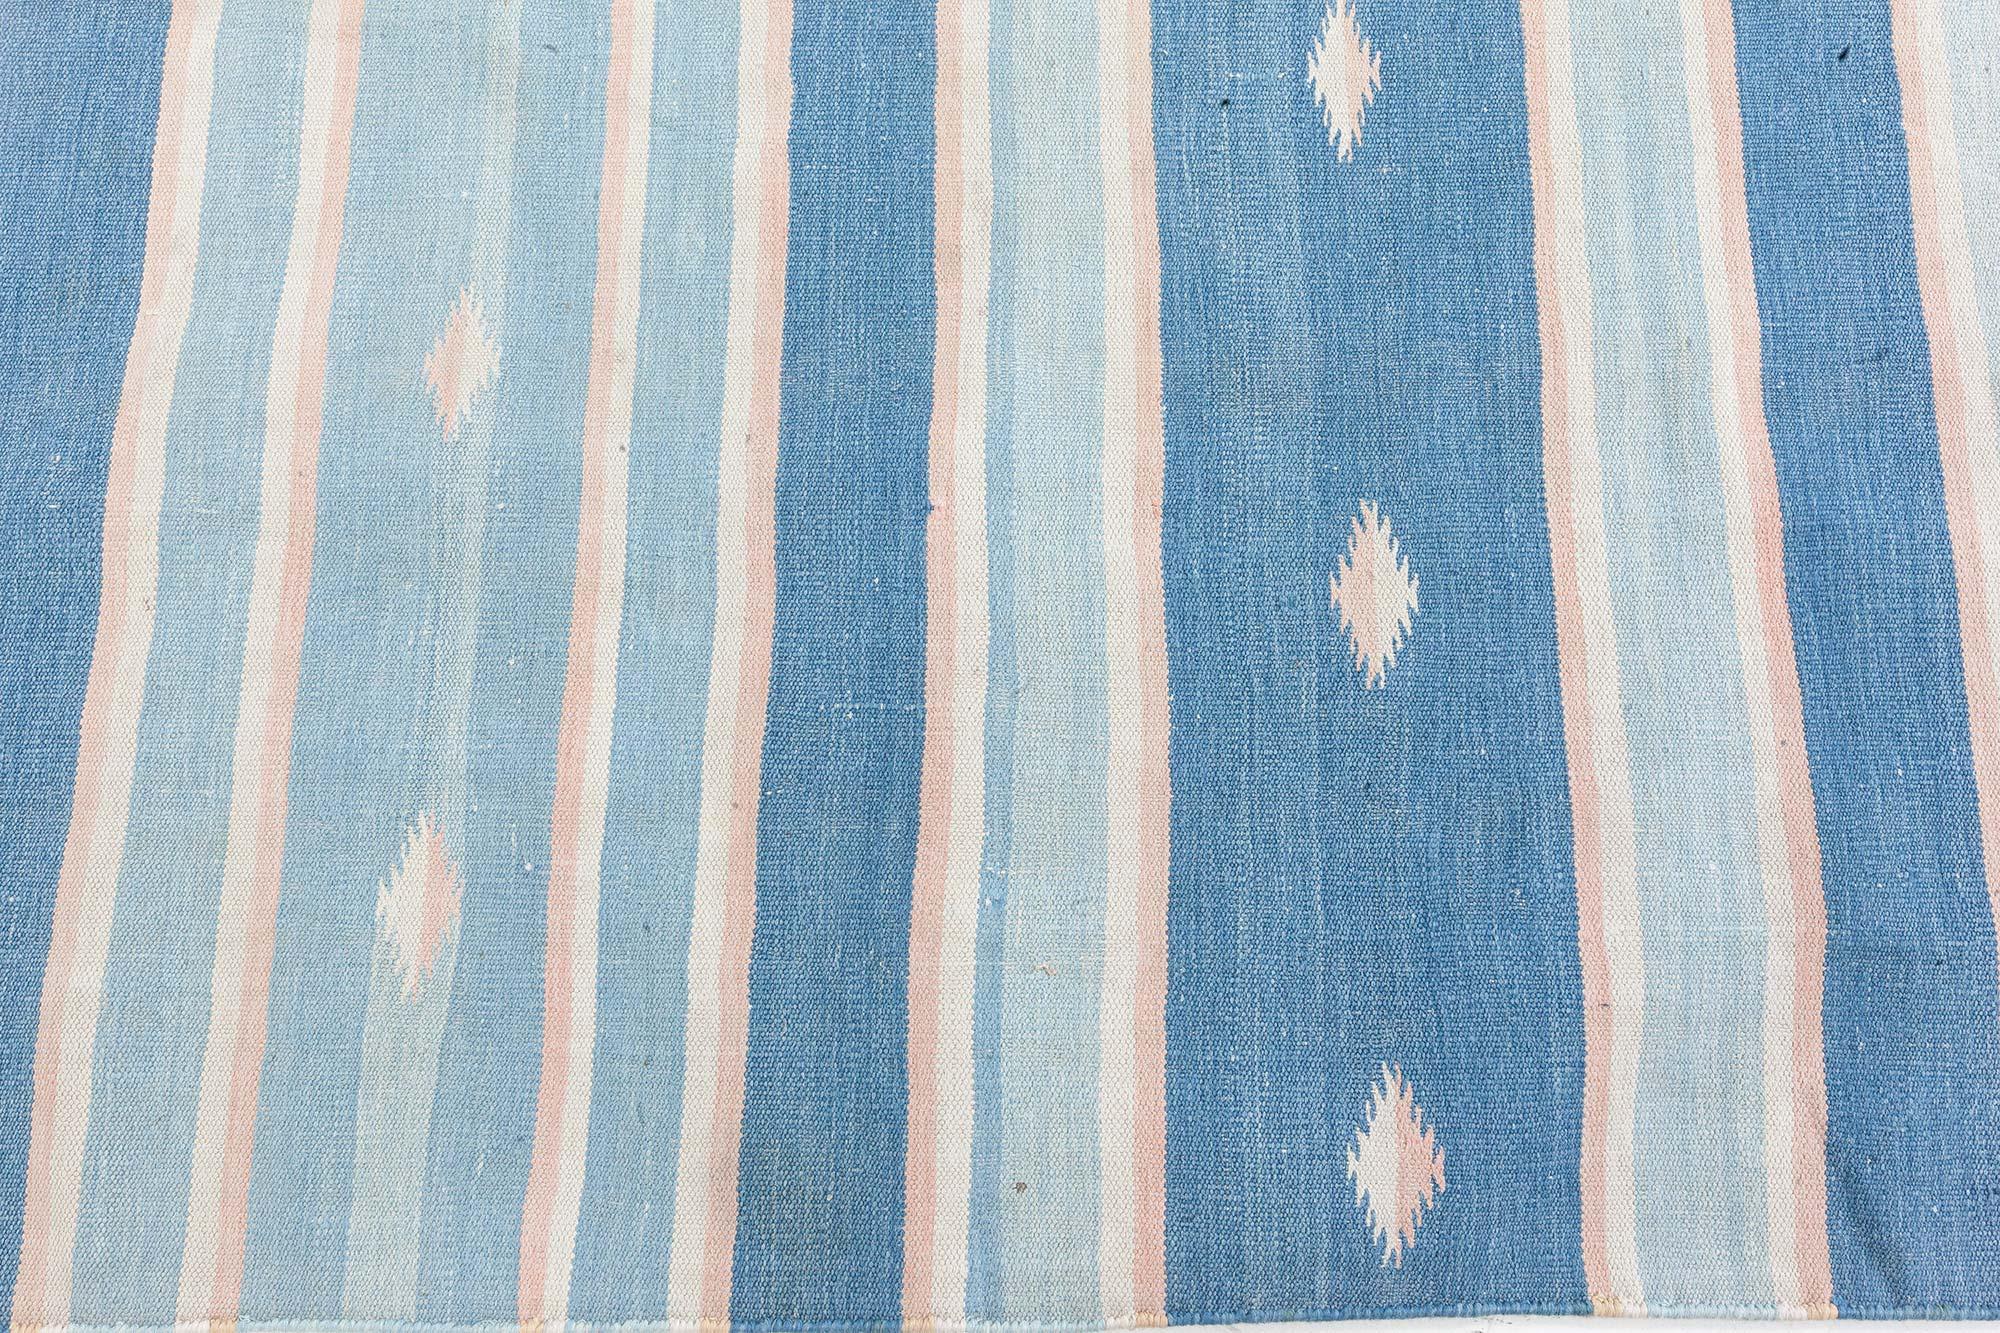 Vintage Indian Dhurrie rug
Size: 8'2